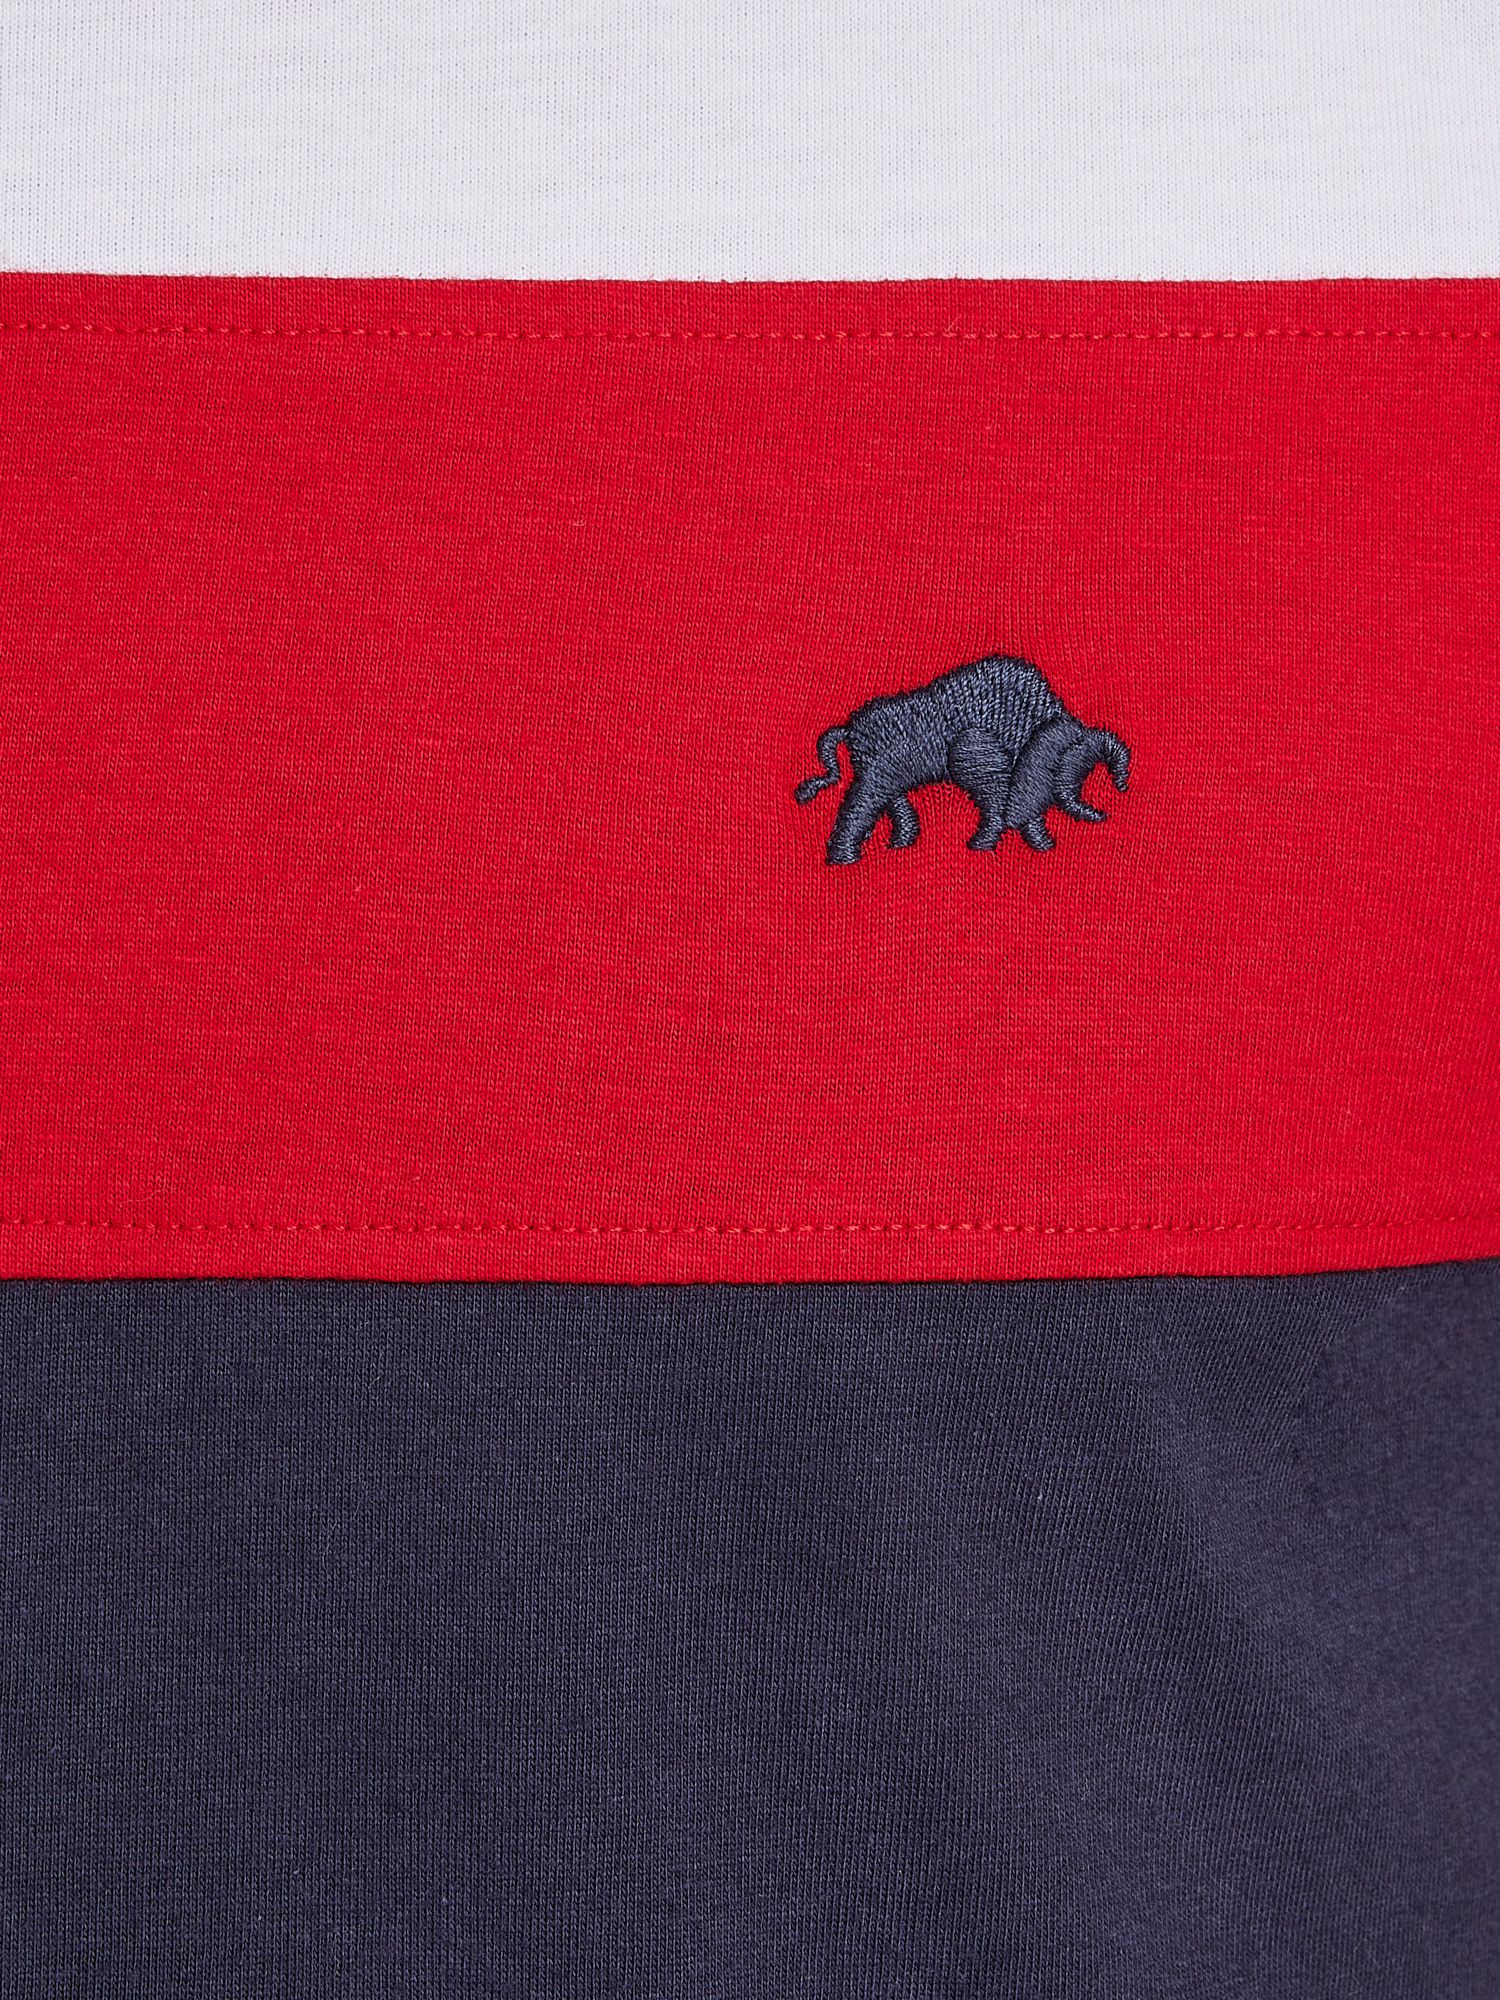 Buy Raging Bull Cut & Sew T-Shirt, Red/Multi Online at johnlewis.com